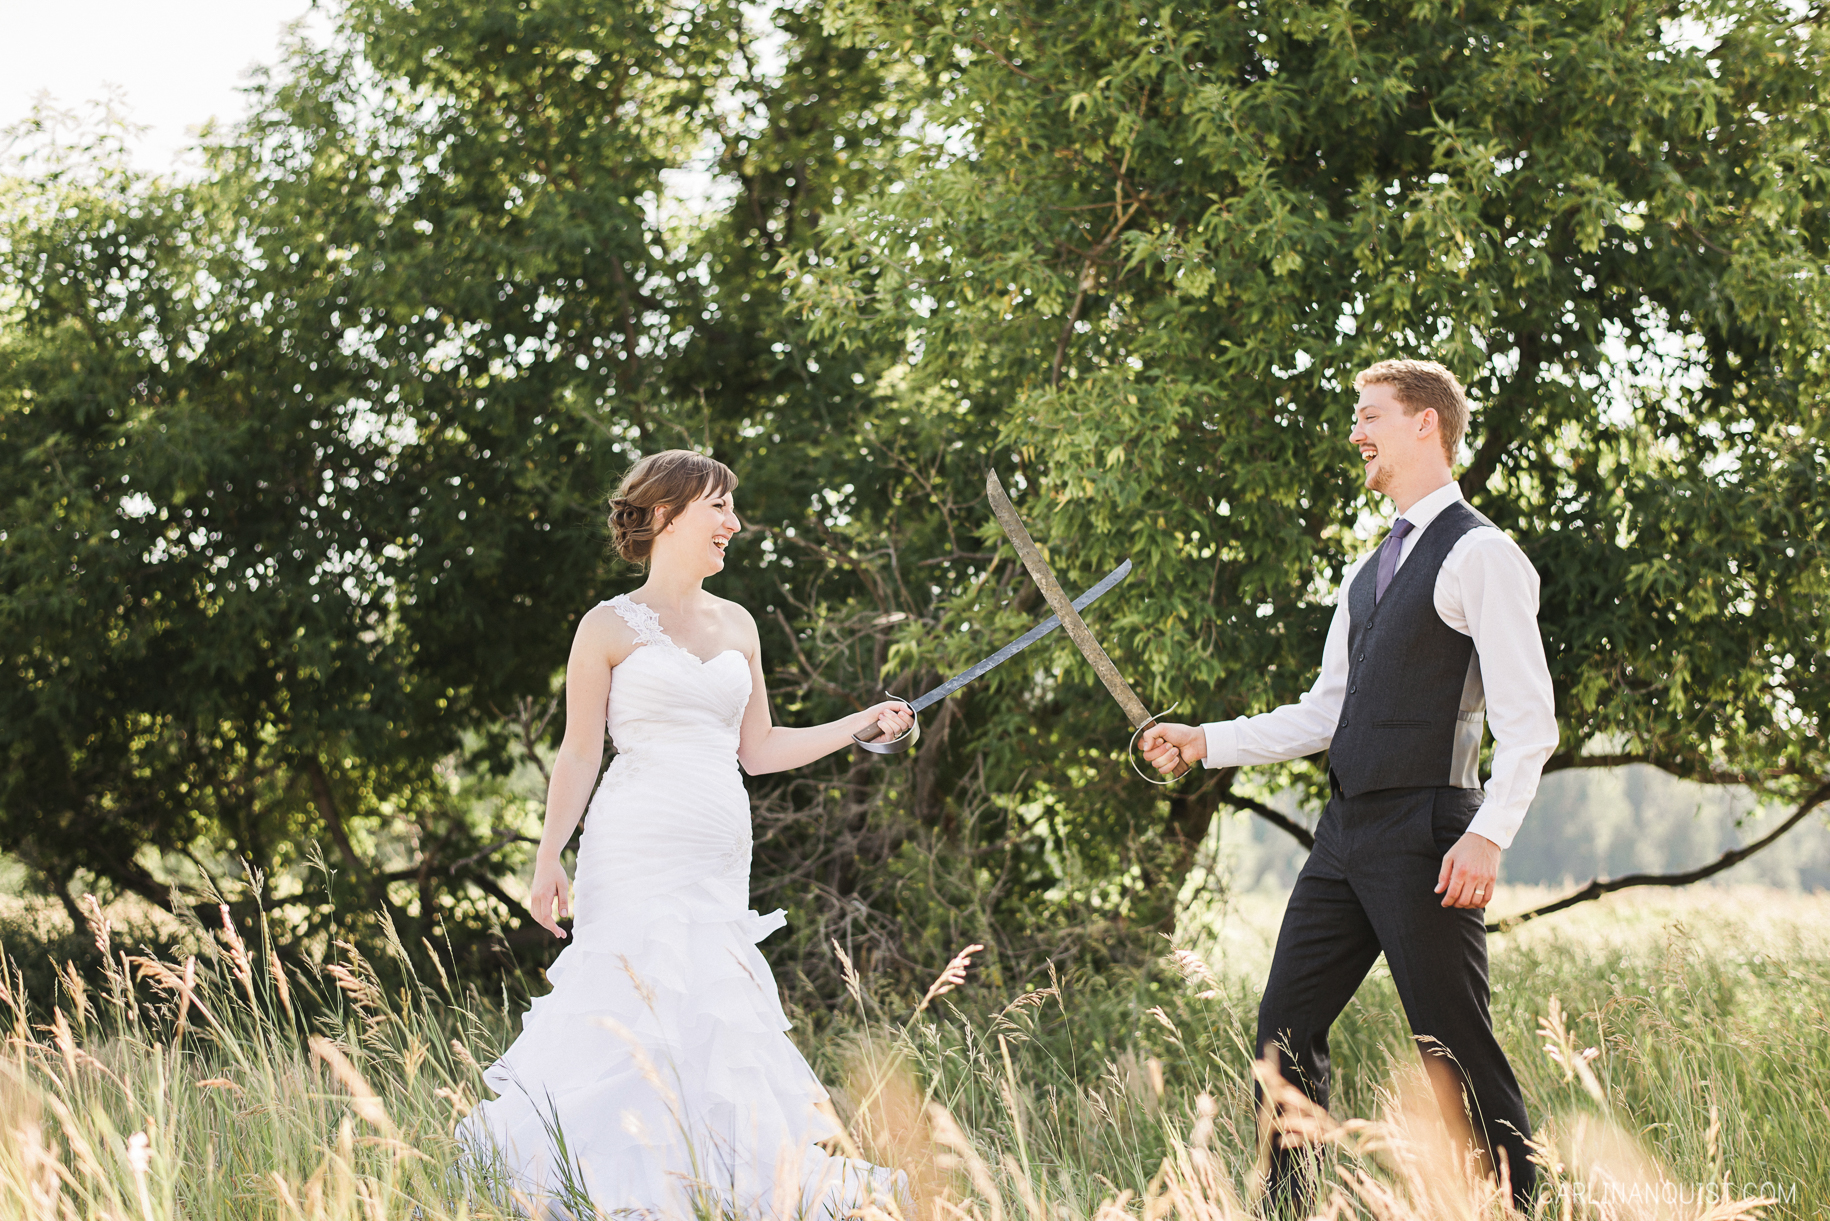 Wedding Photos with Swords